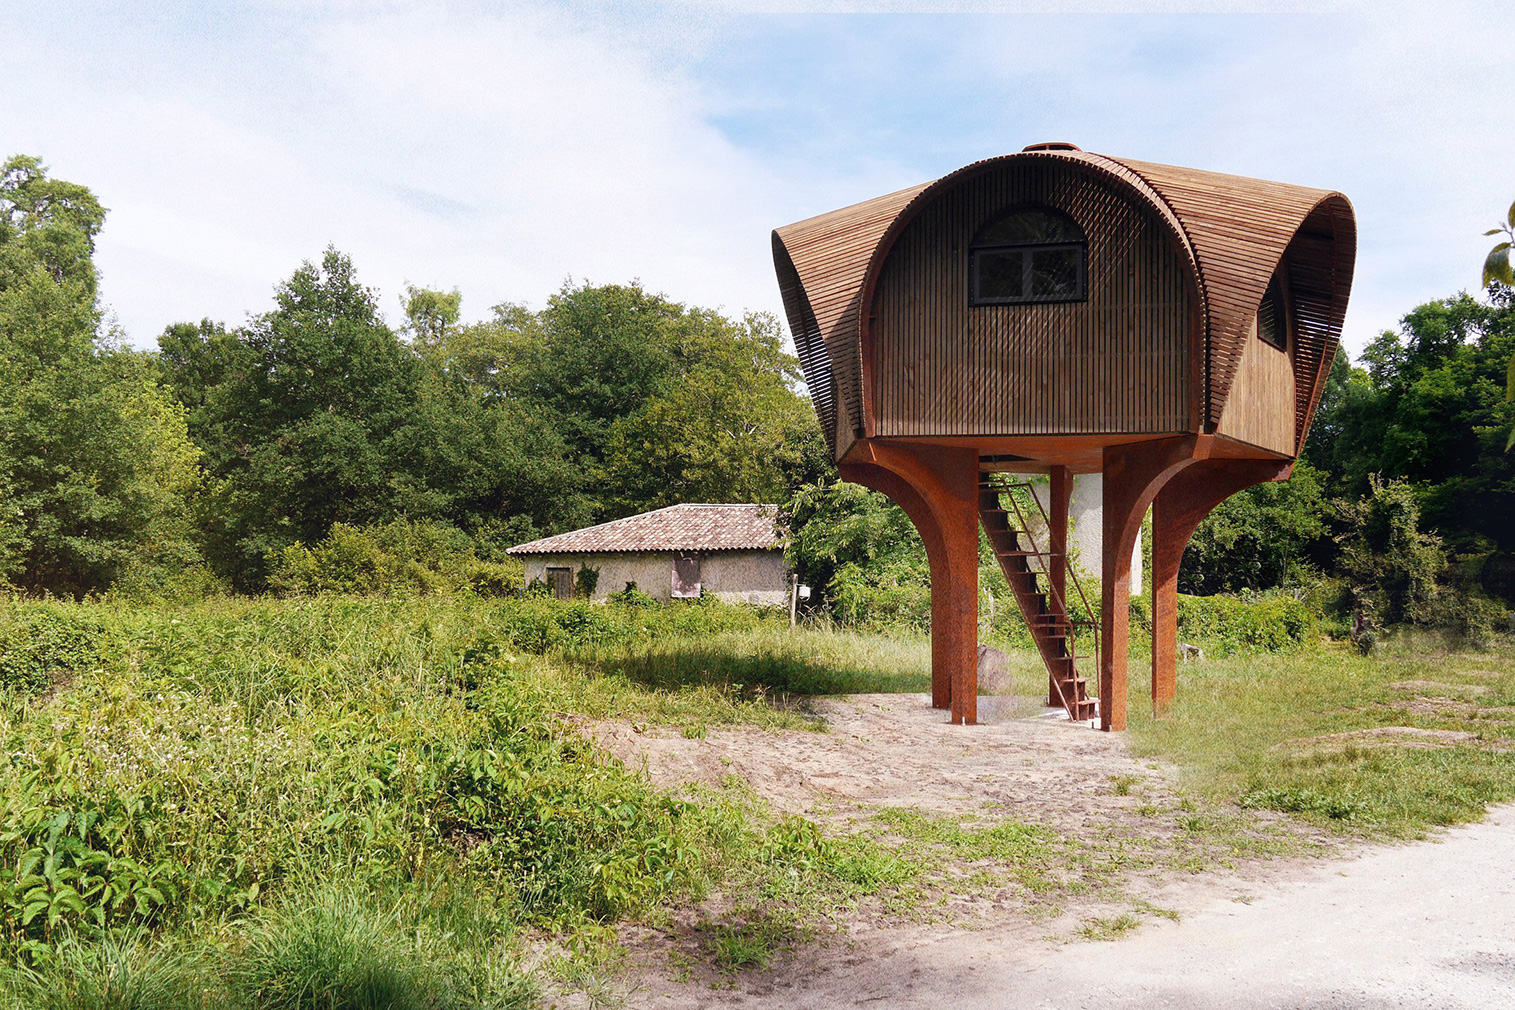 Le Haute Perché cabin designed by Studio Weave in Bordeaux